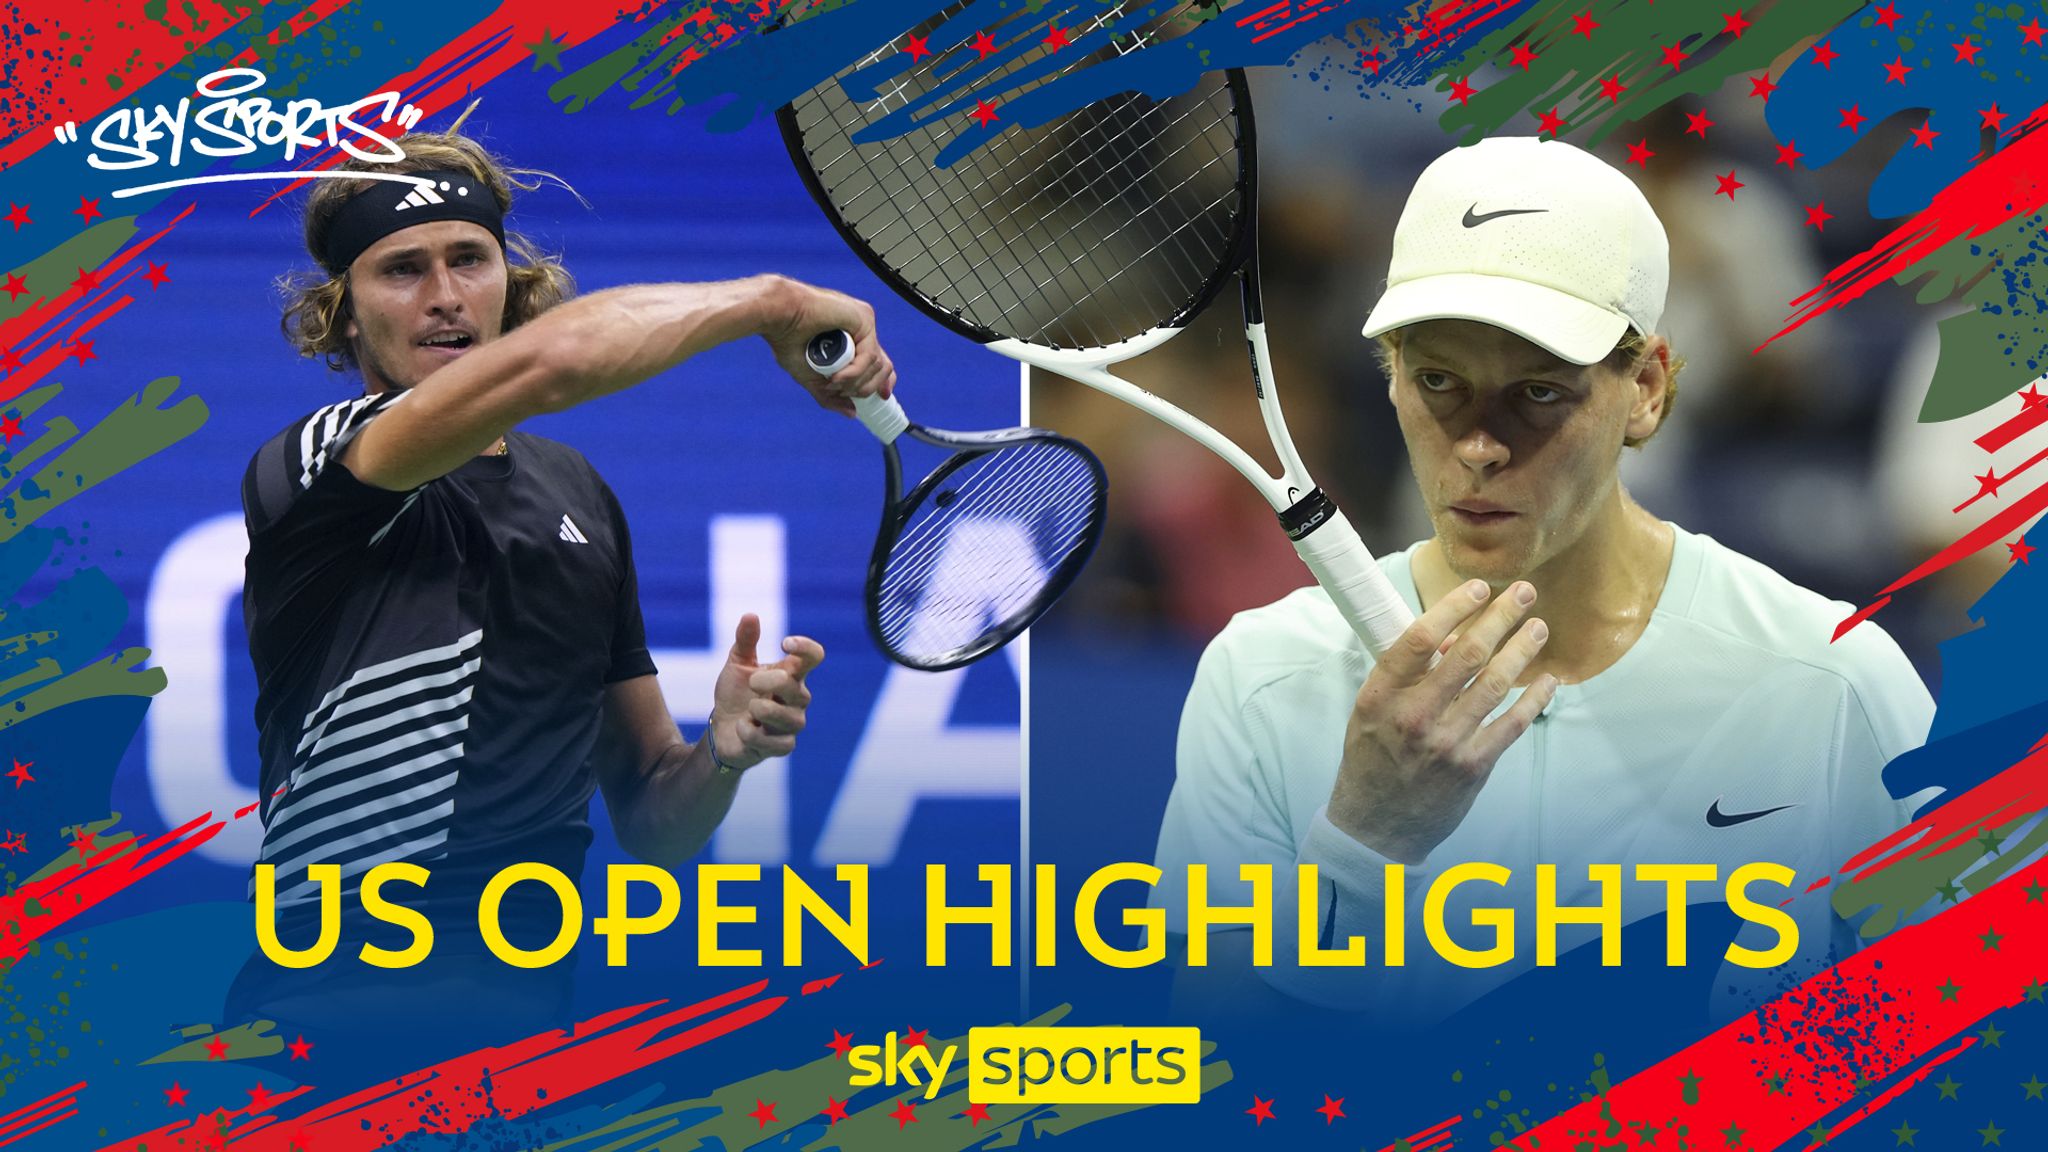 Alexander Zverev vs Jannik Sinner US Open Highlights Tennis News Sky Sports